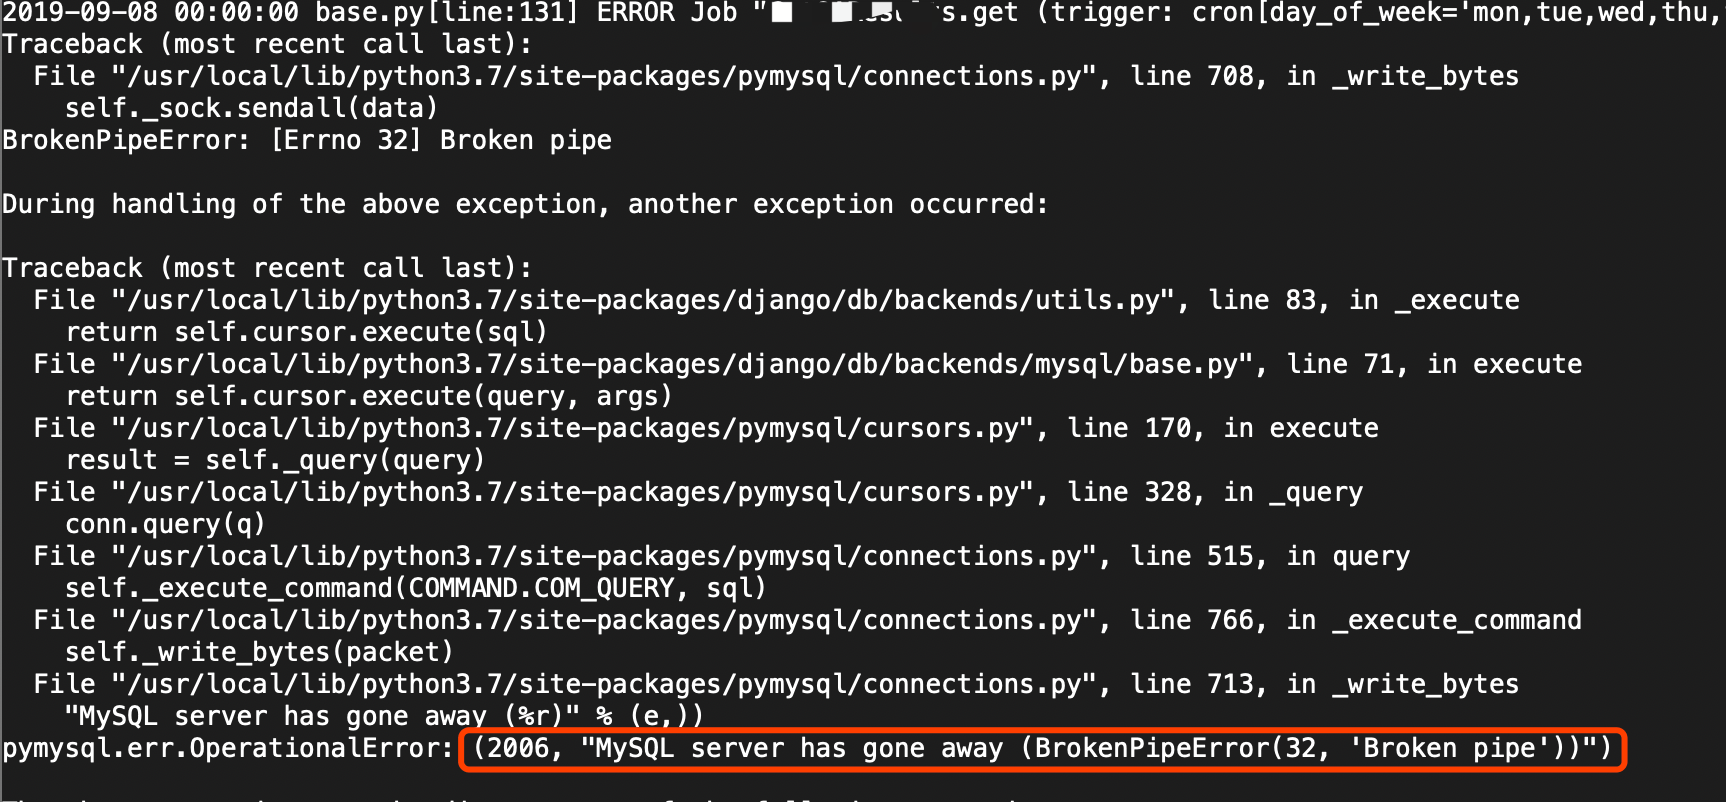 pymysql.err.OperationalError: (2006, “MySQL server has gone away (BrokenPipe